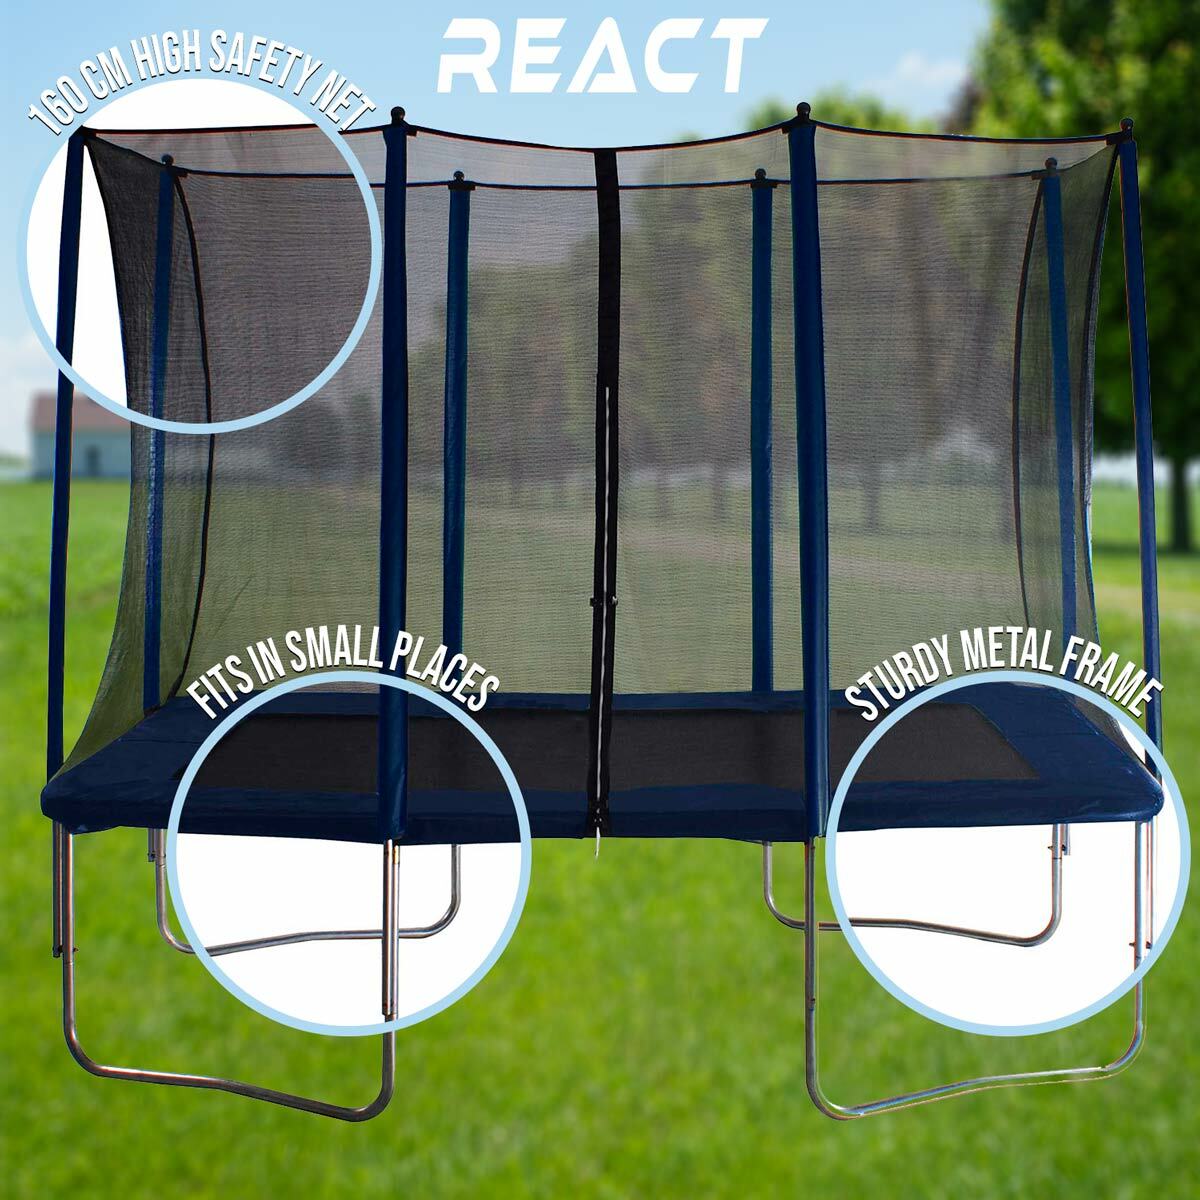 React firkantet trampolin 163x216cm med sikkerhedsnet